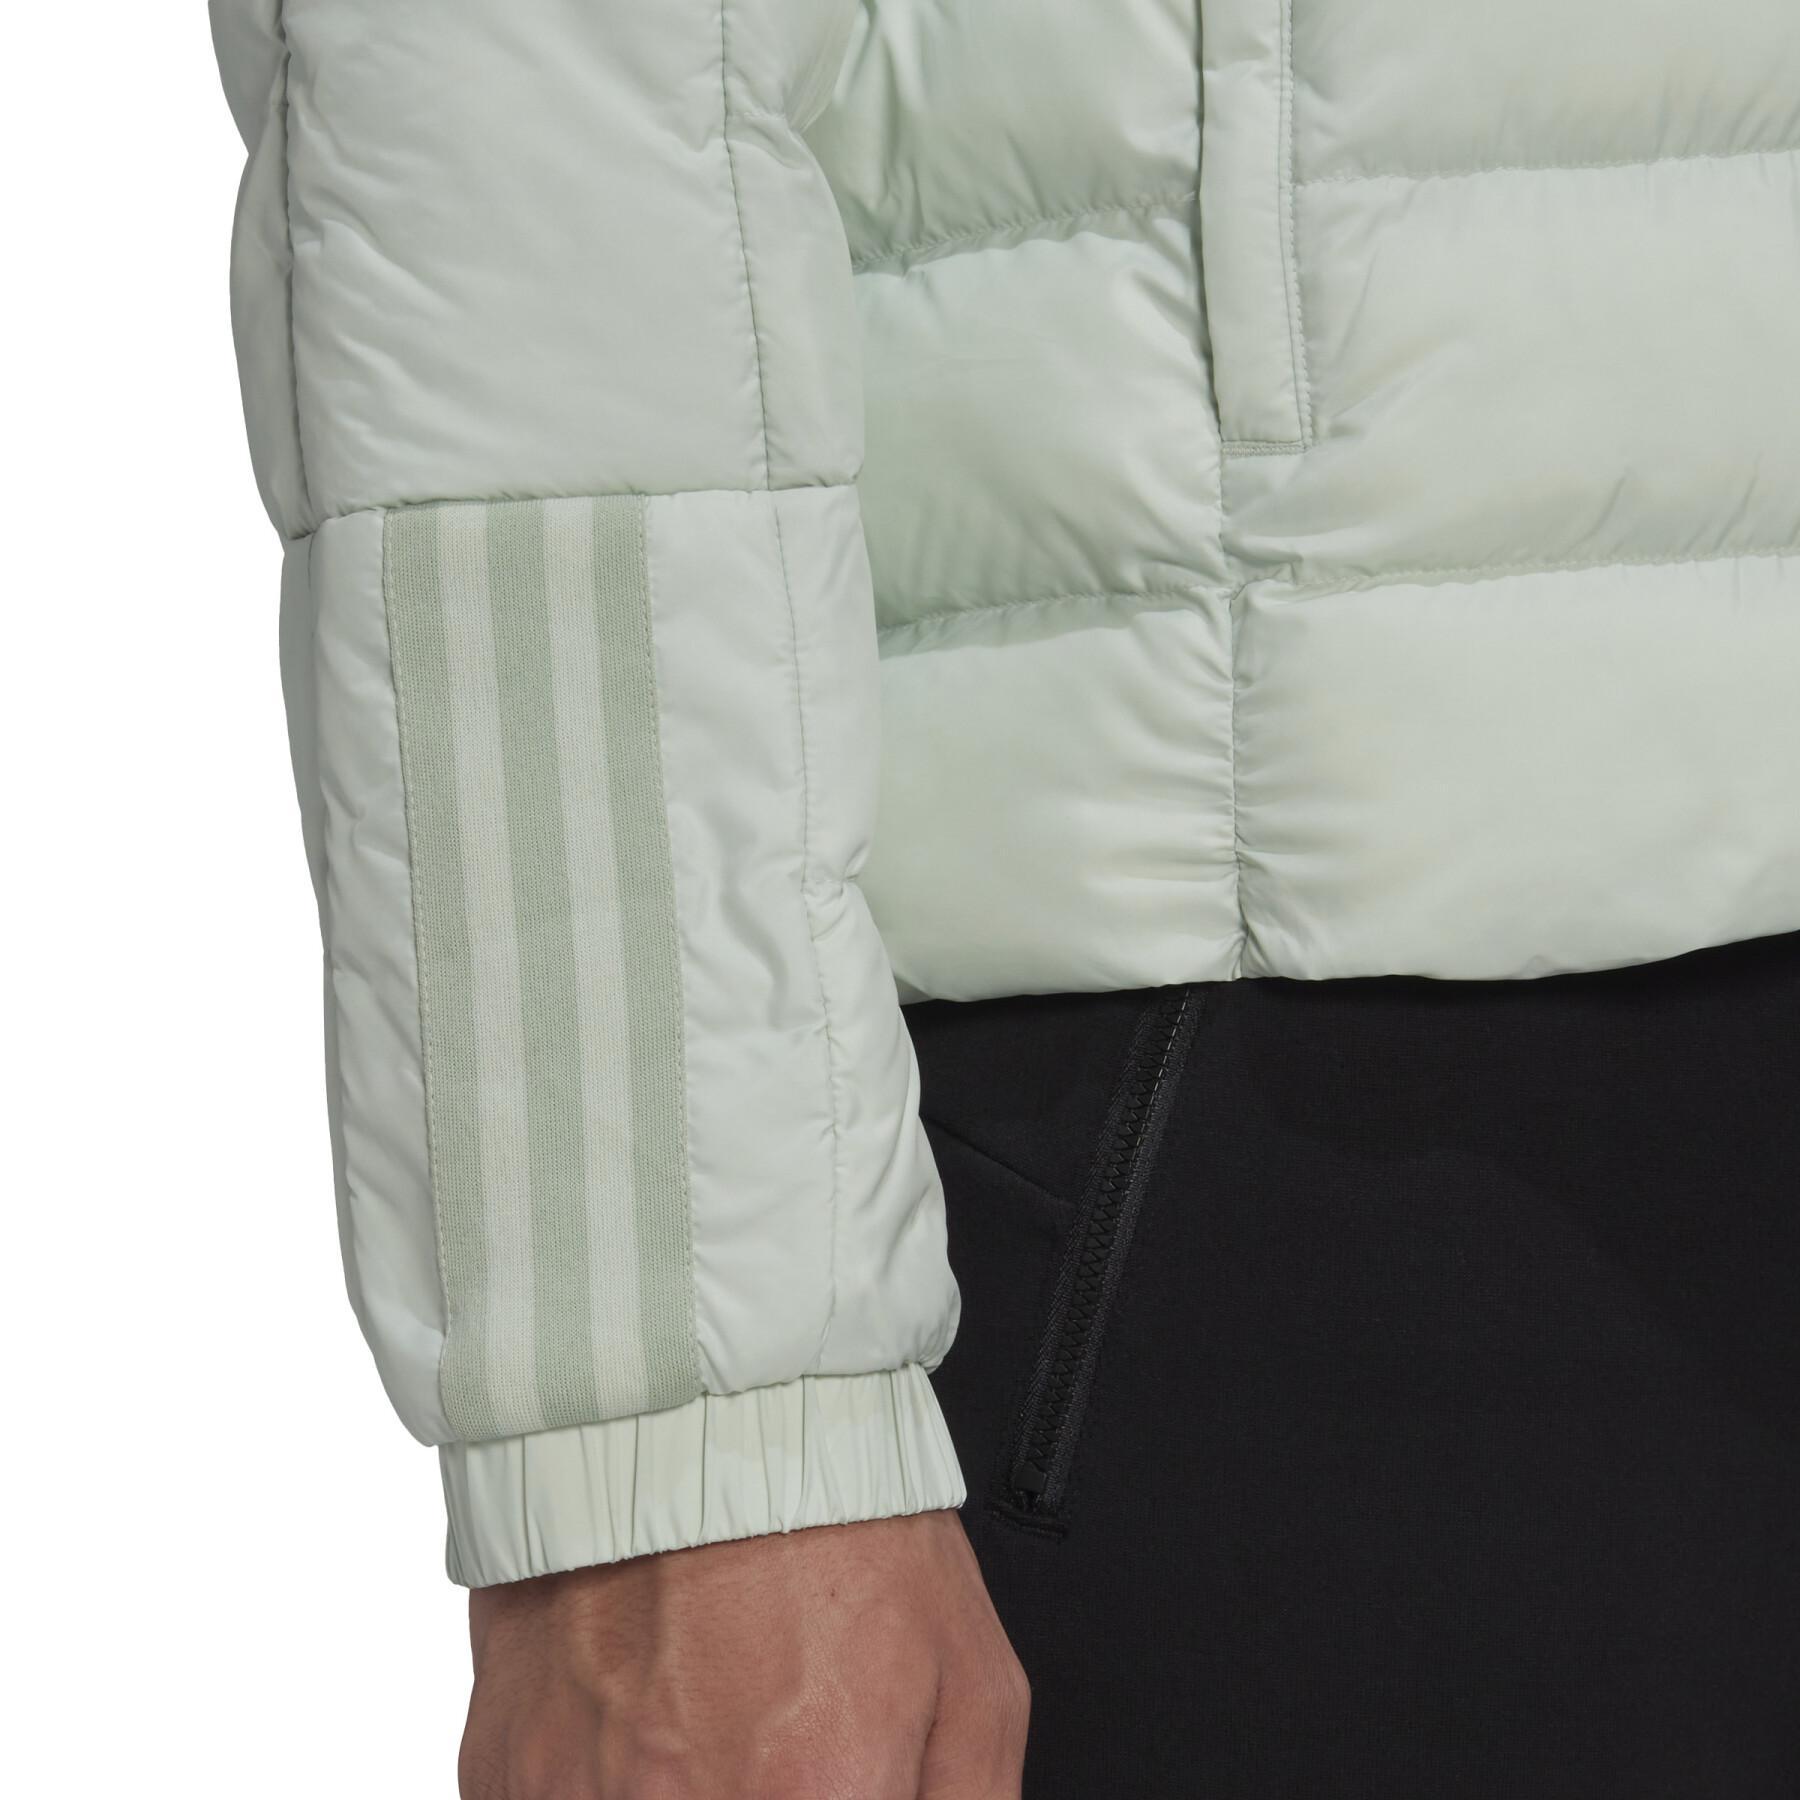 Medium jacket adidas Itavic